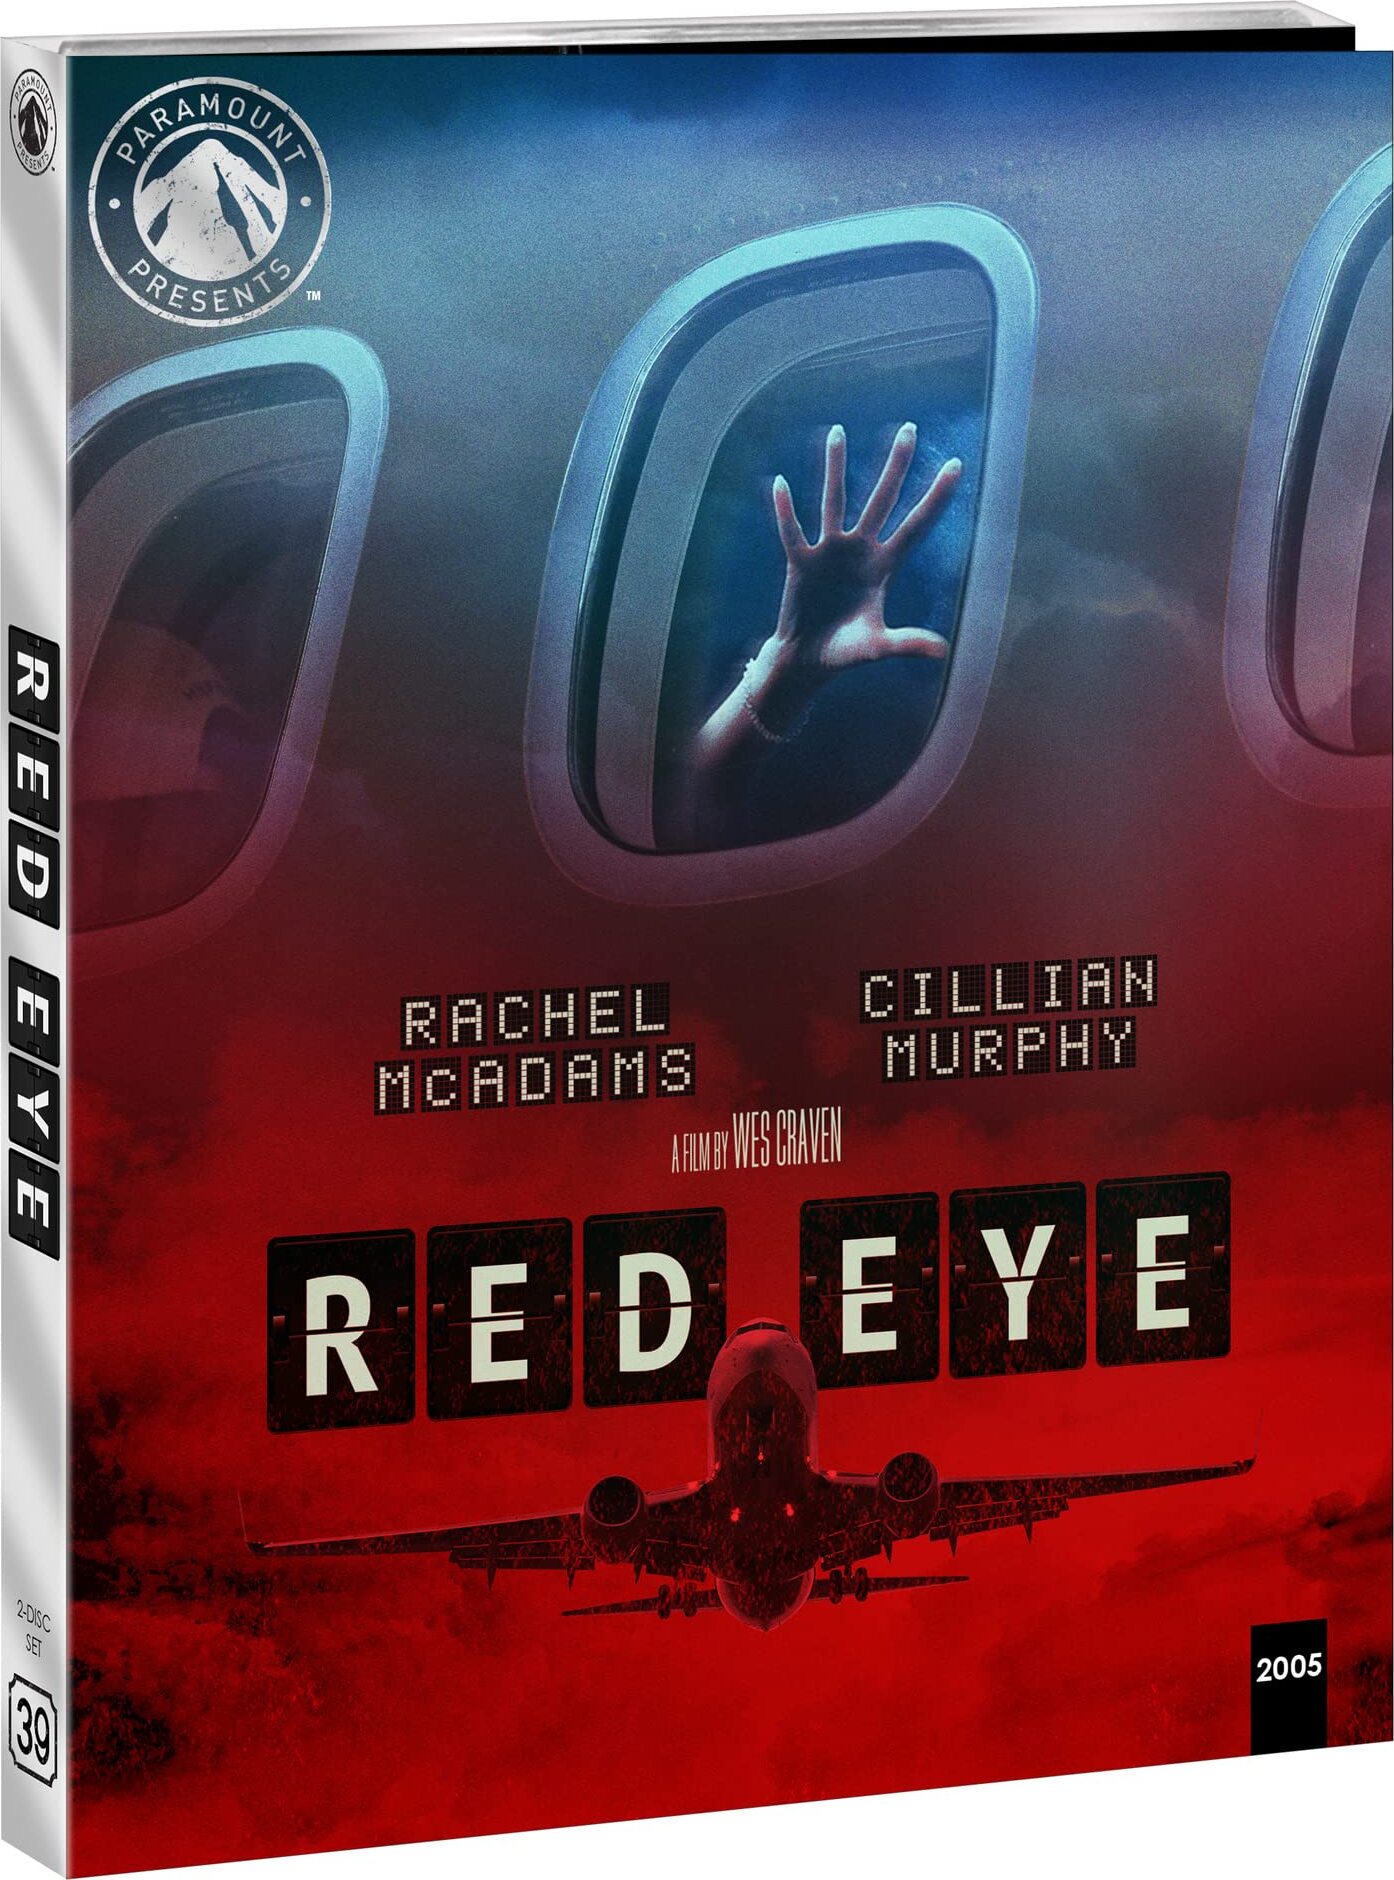 Red Eye 4K Bluray (UPDATED)